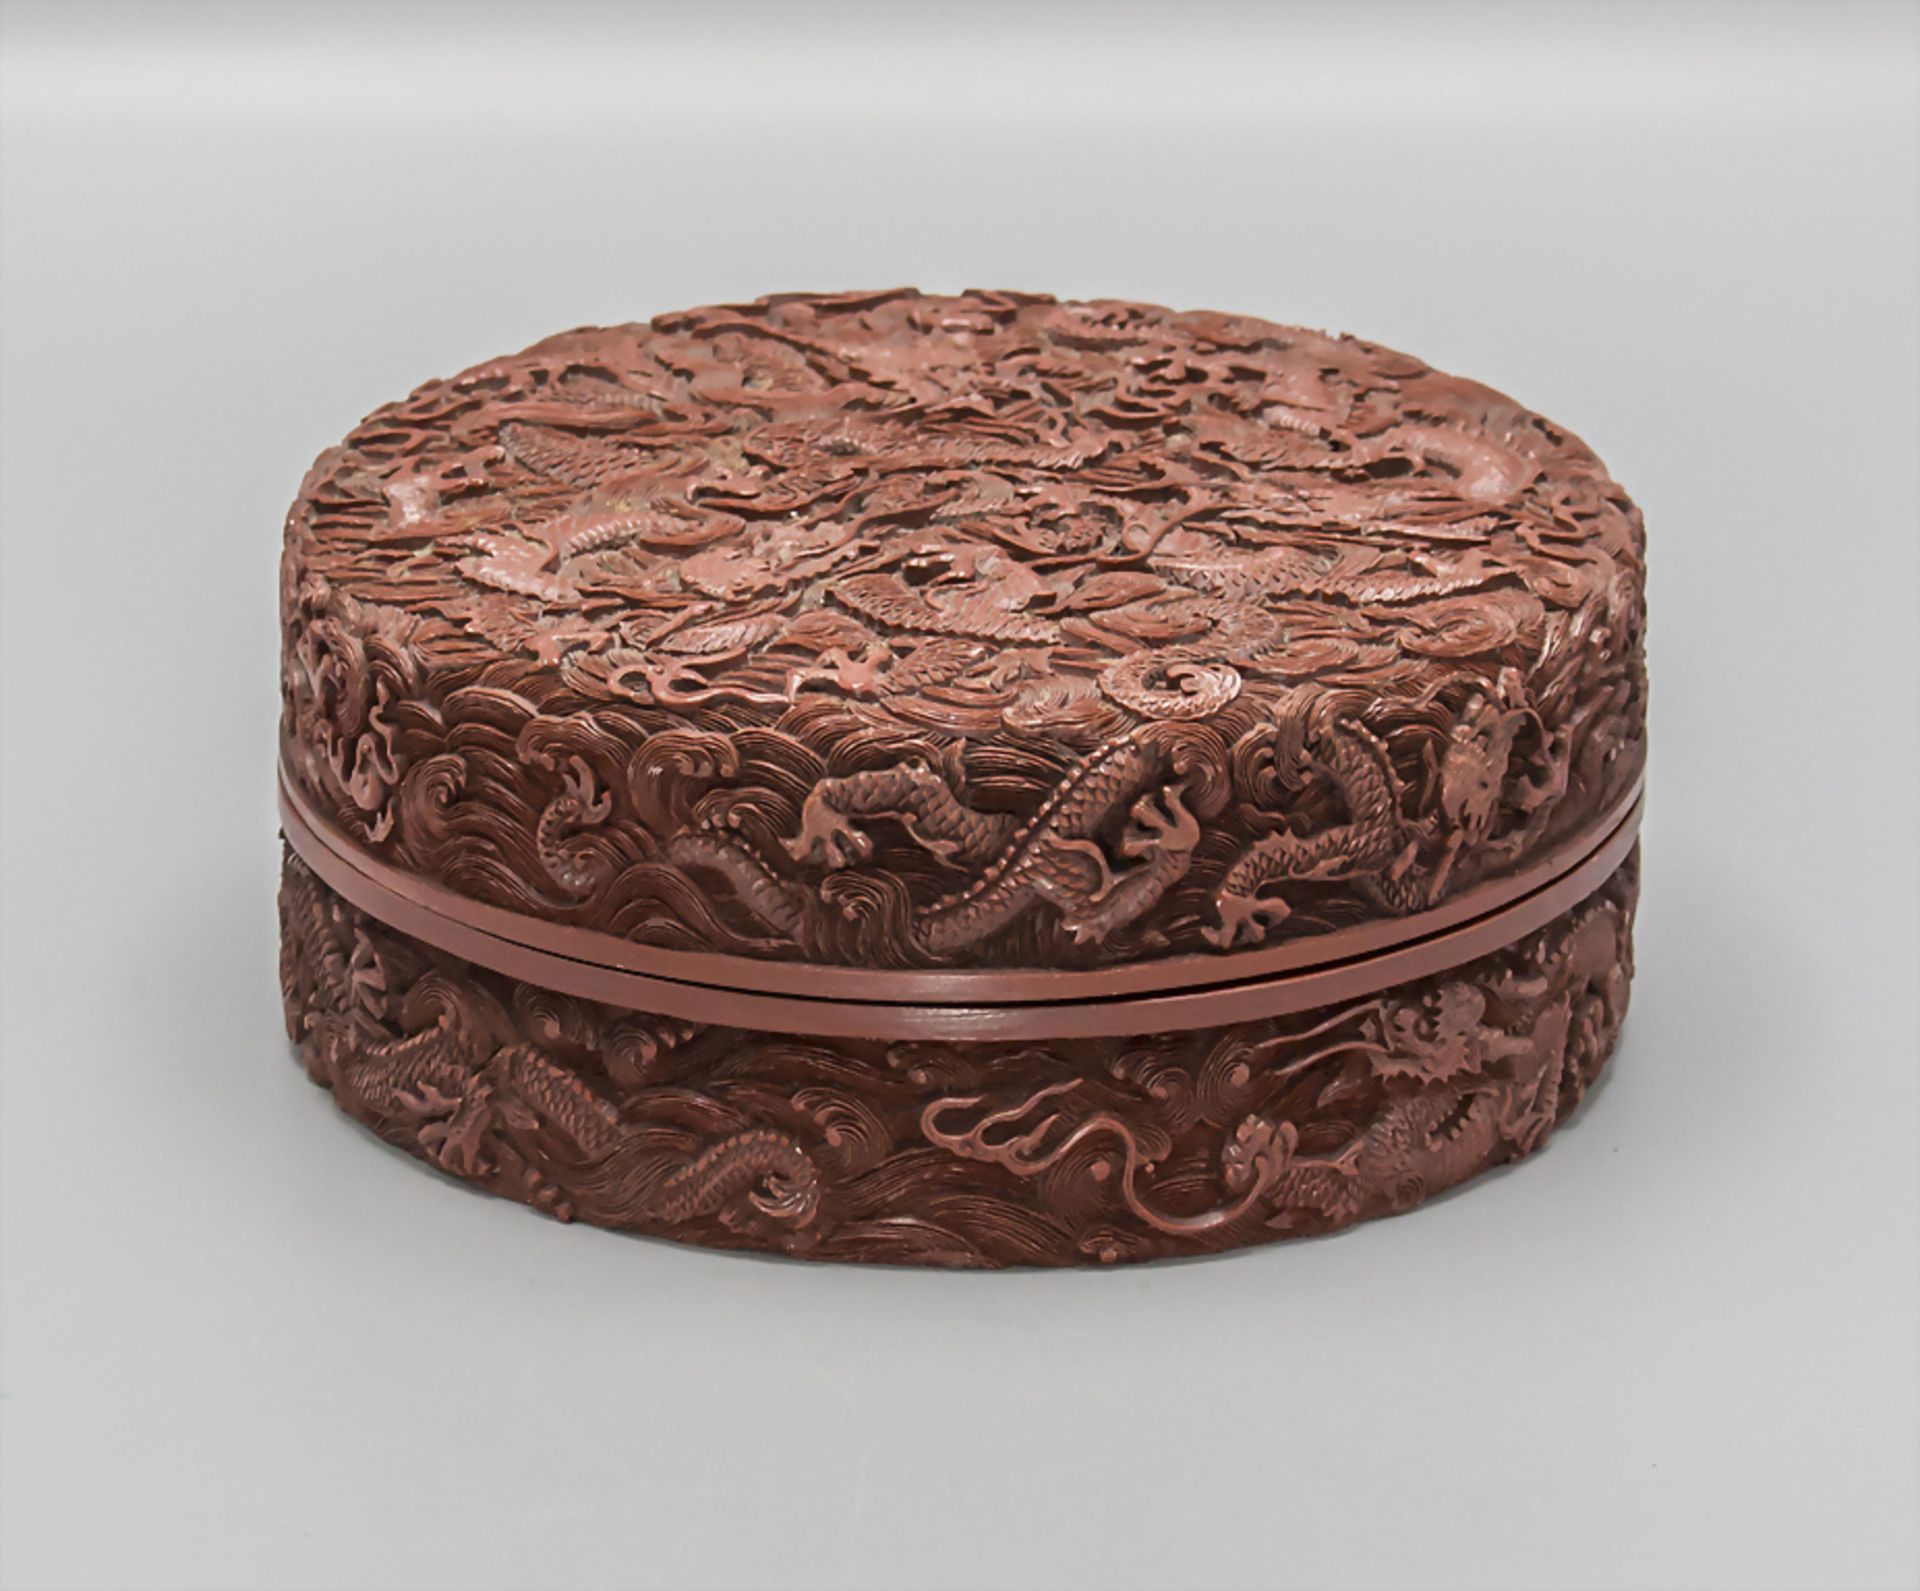 Deckeldose mit Drachenreliefdekor / A lidded box with dragon relief decoration, China